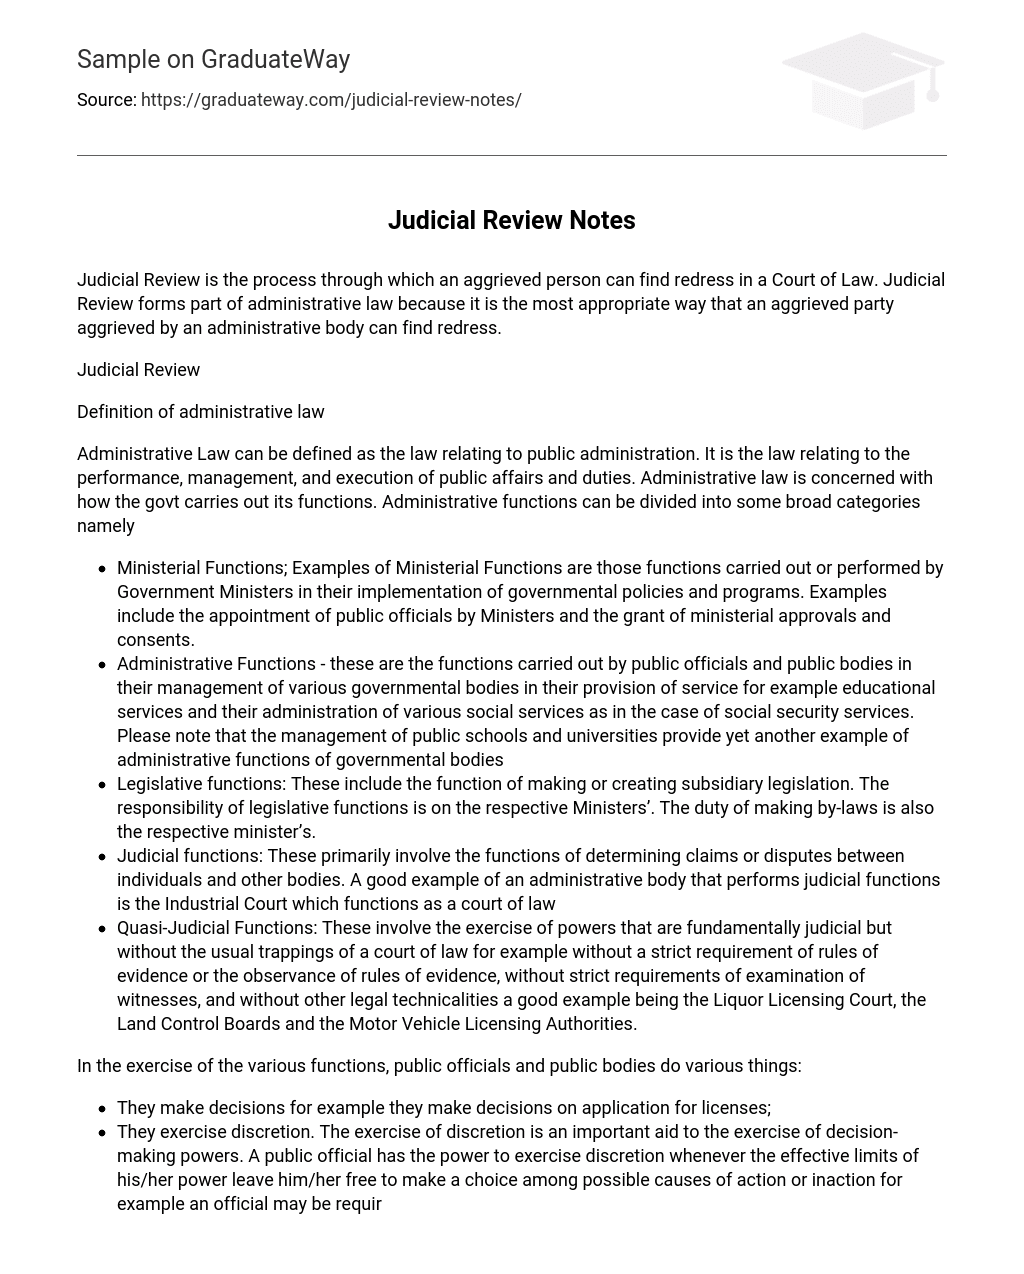 Judicial Review Notes